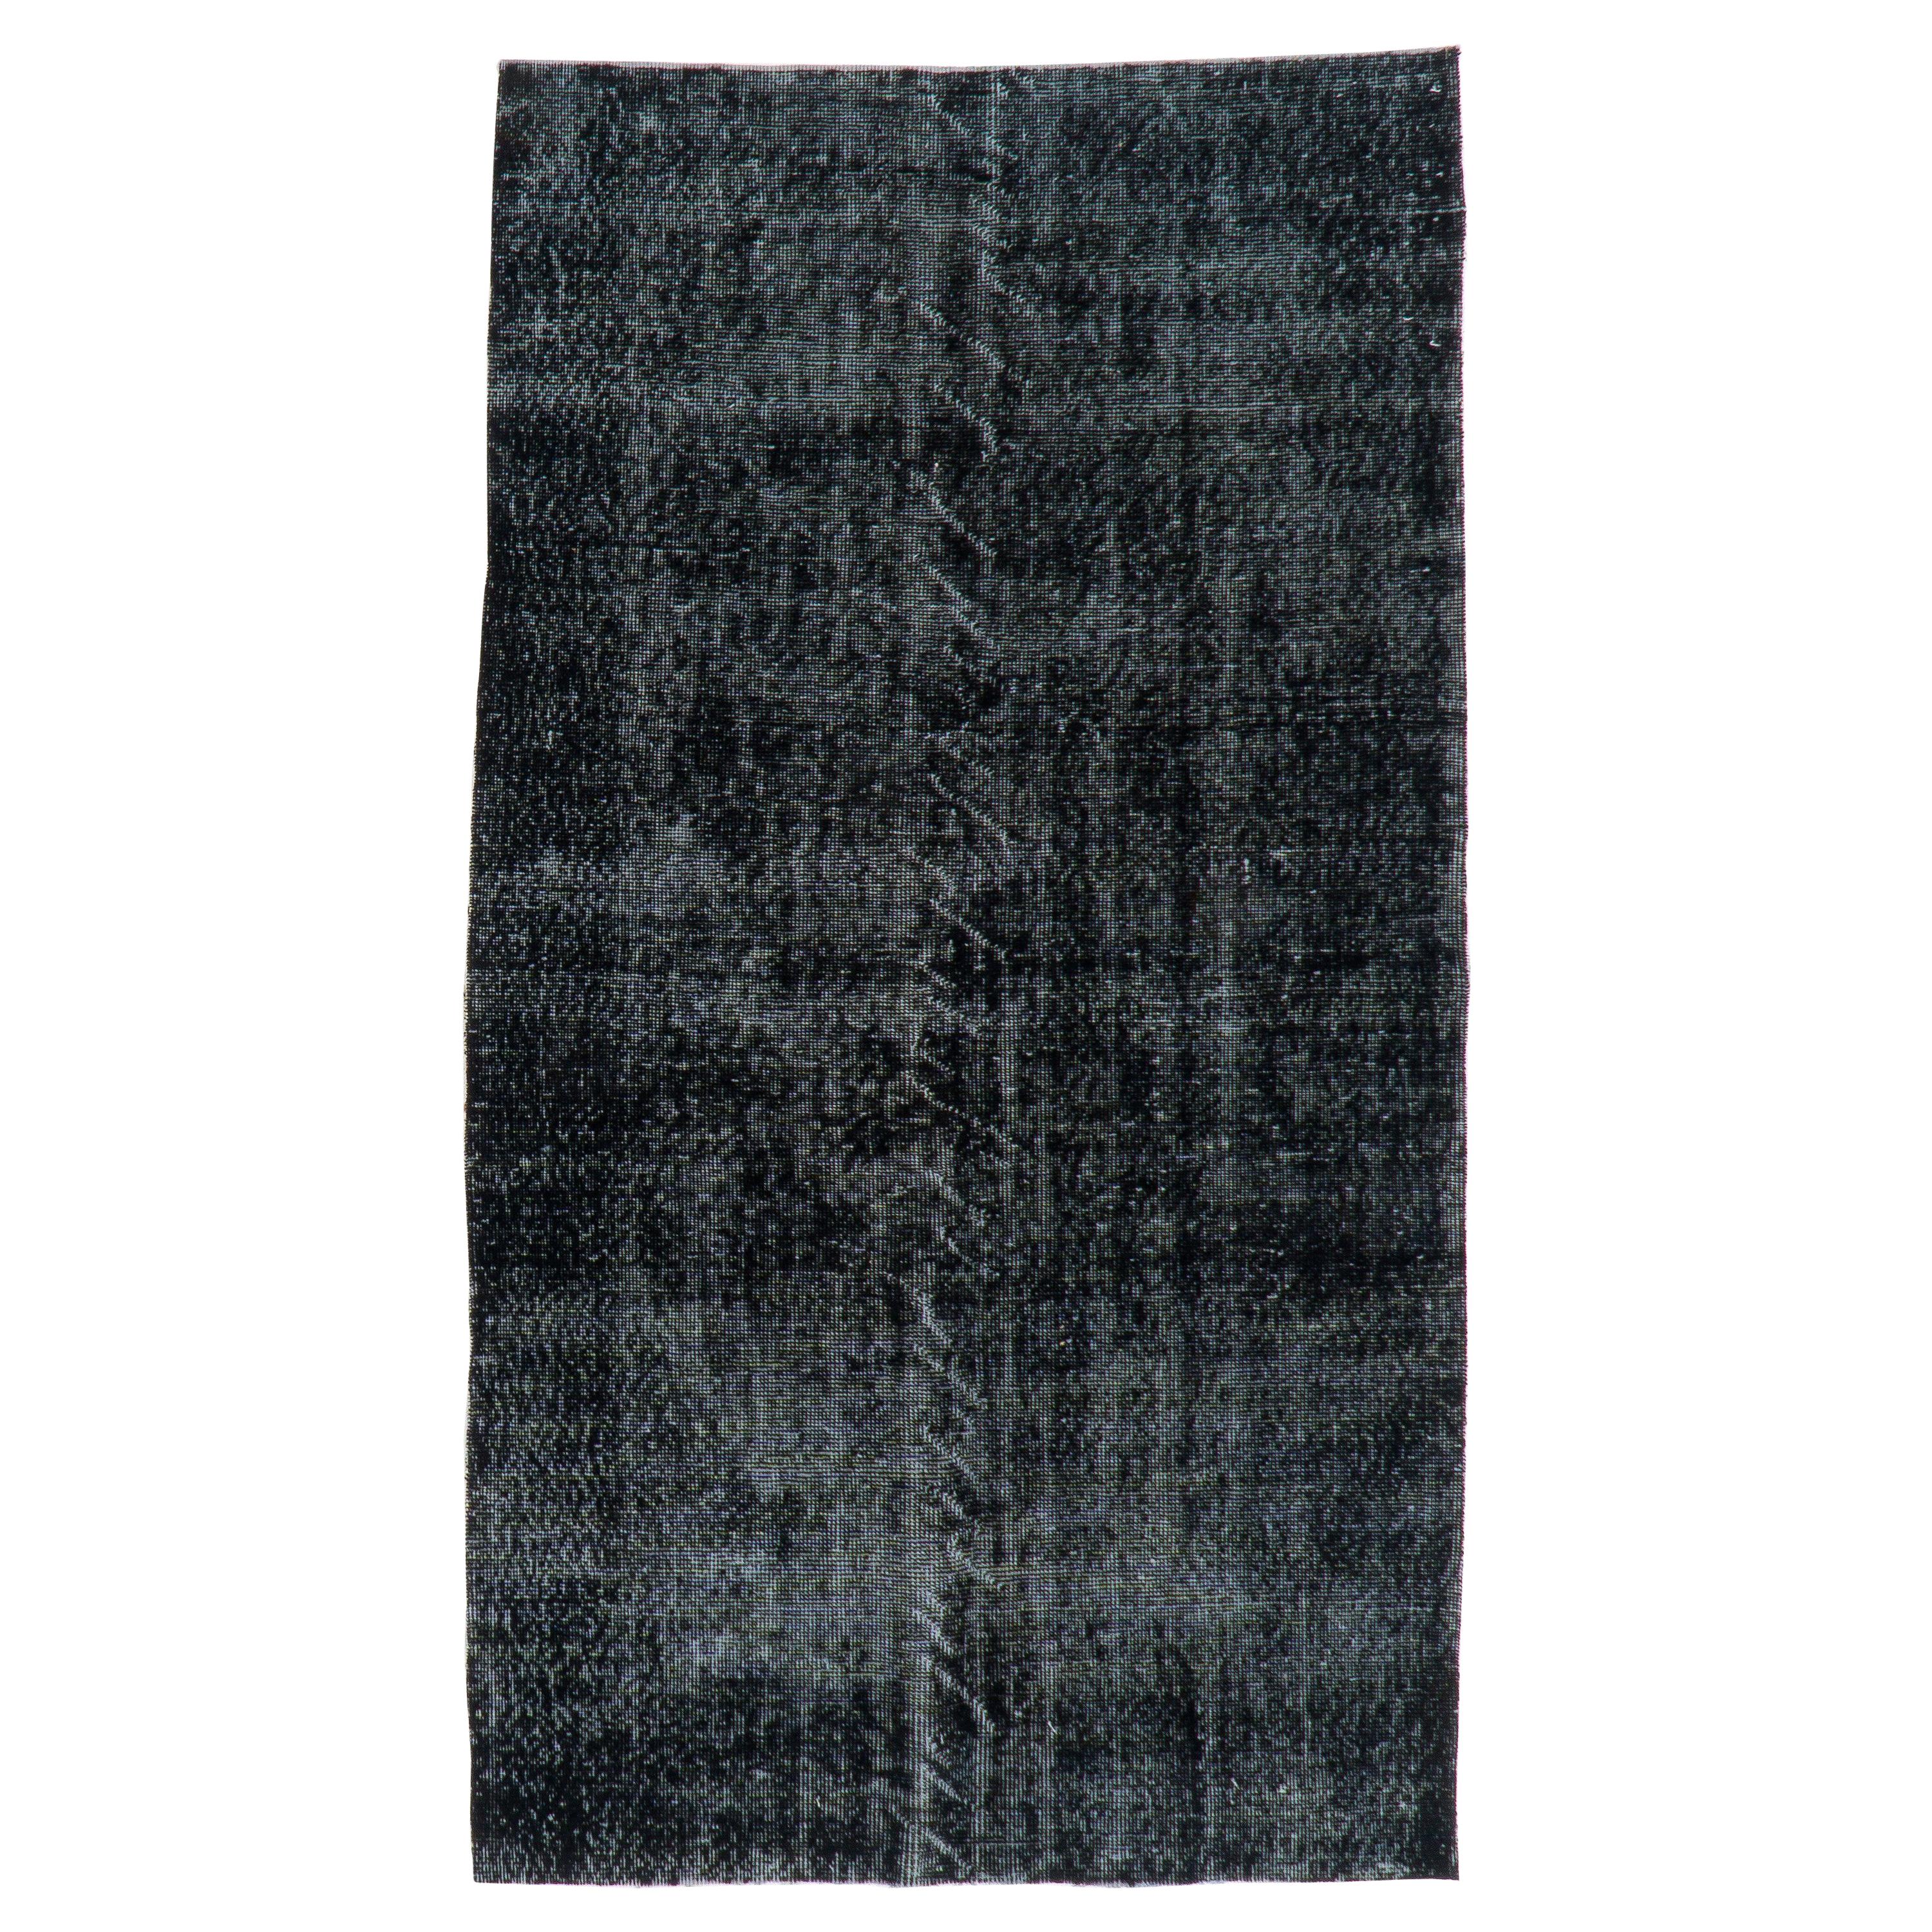 3.7x6.6 Ft Vintage Handmade Turkish Accent Rug. Modern Carpet in Solid Black For Sale